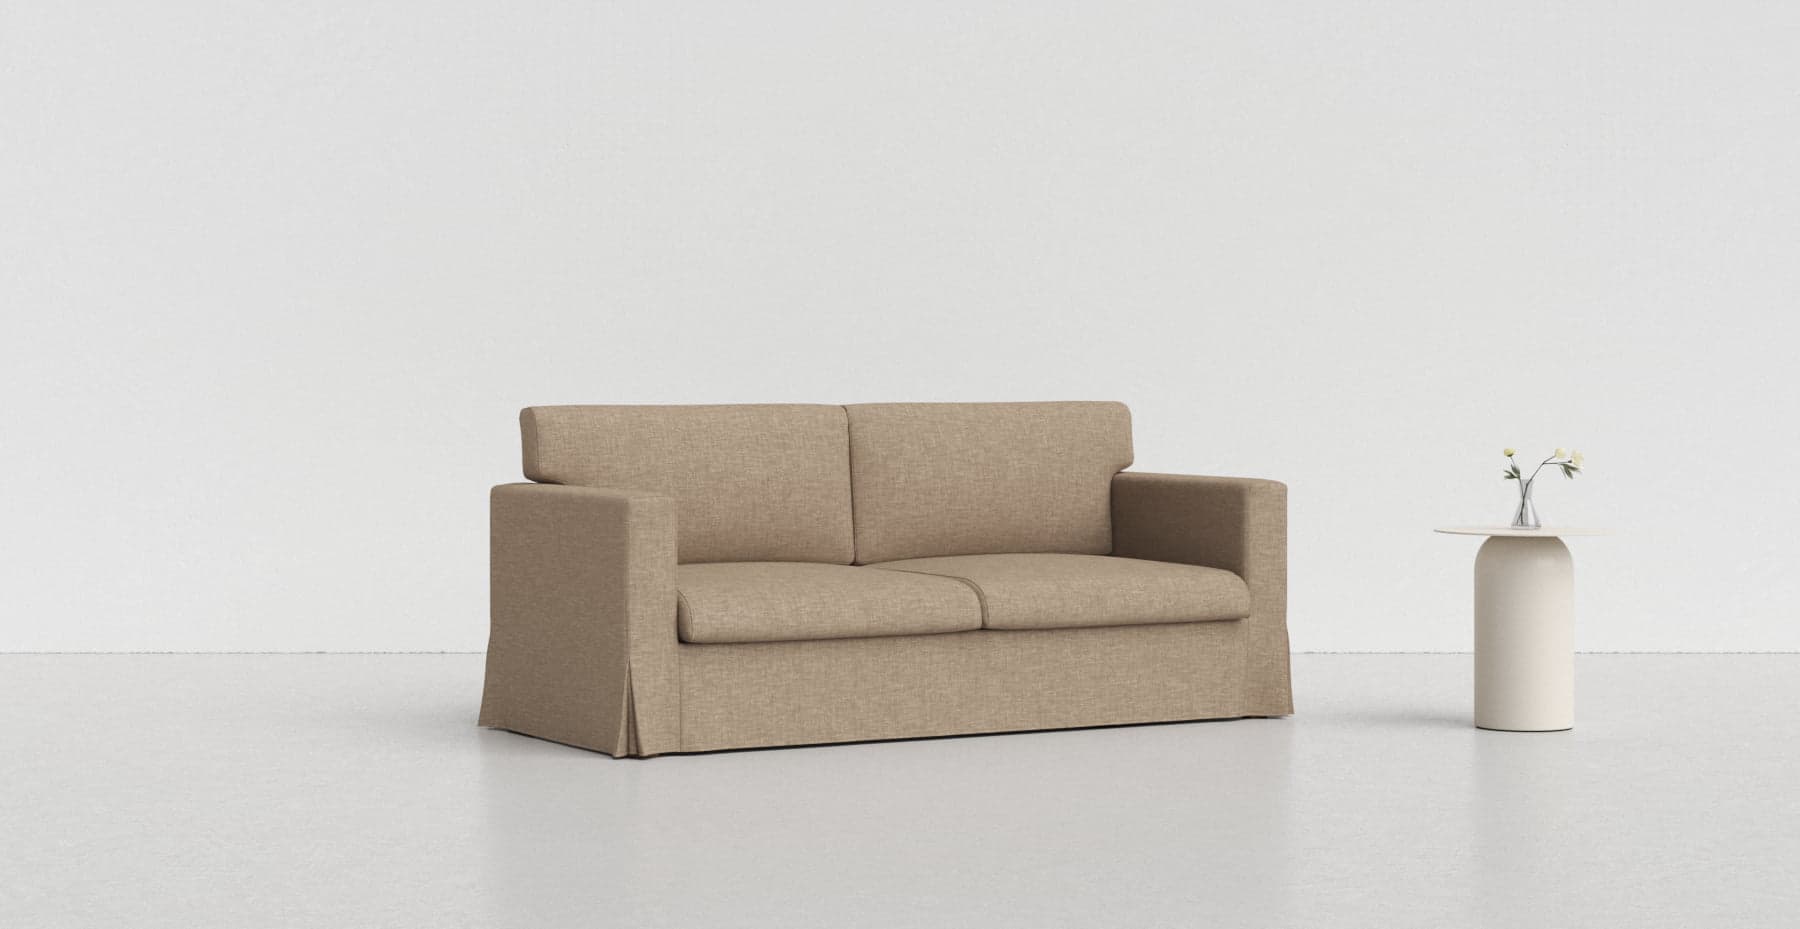 Custom Made Cover Fits IKEA Sandby 3 Seater Sofa Replace Three-Seat Sofa Cover 